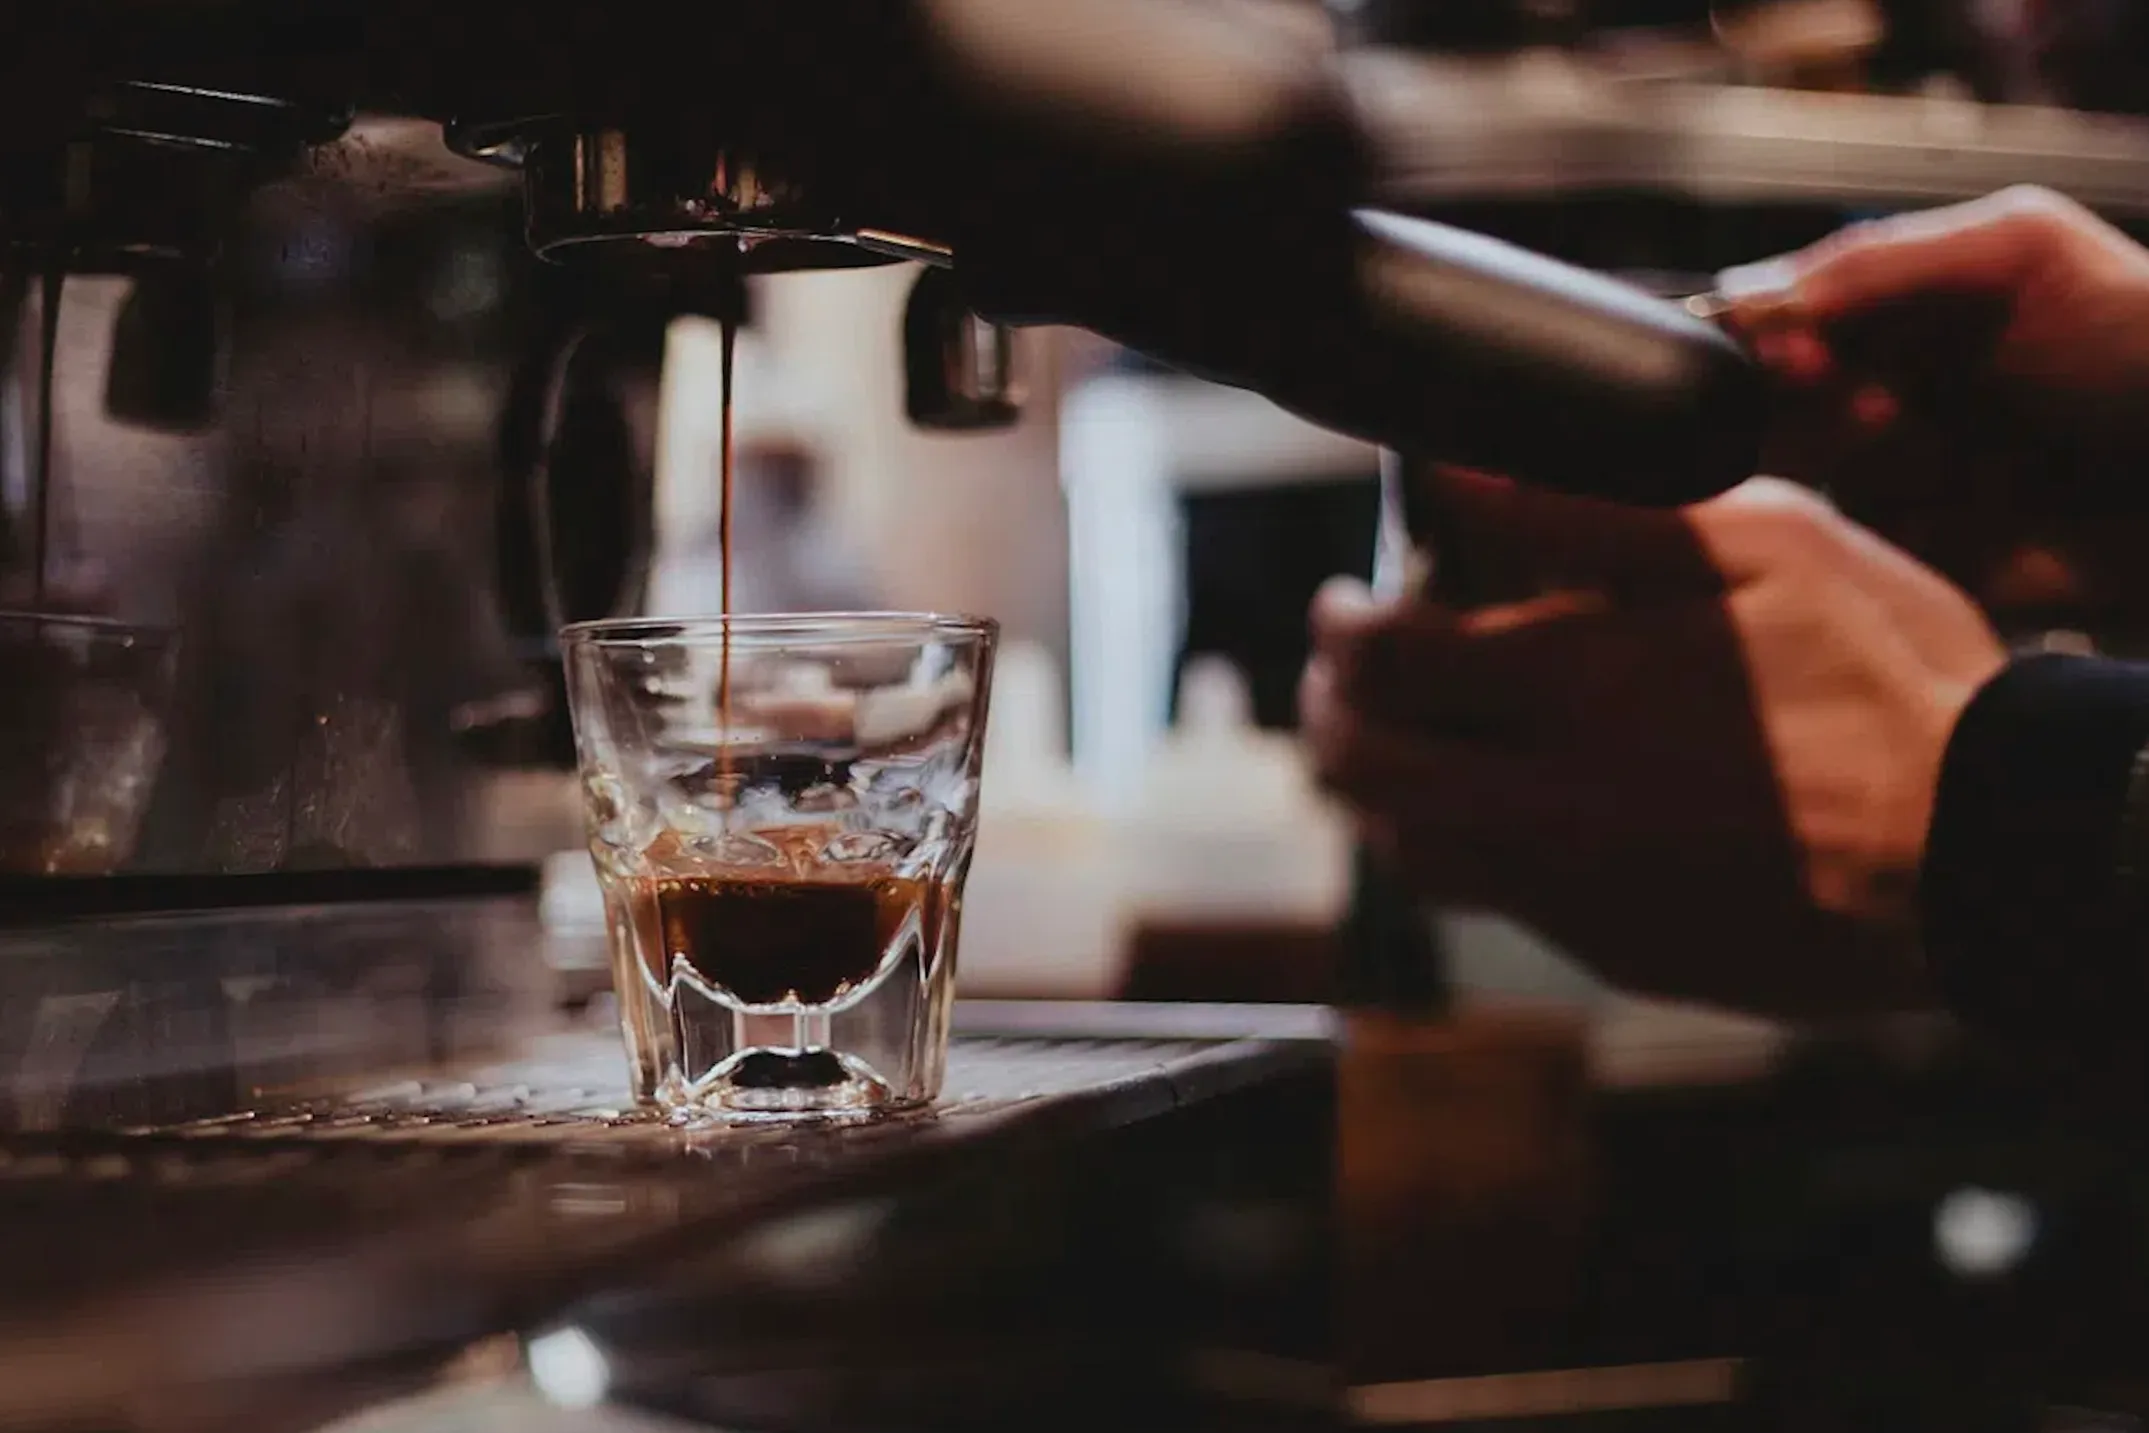 Italian Espresso style small coffee has taken over the world